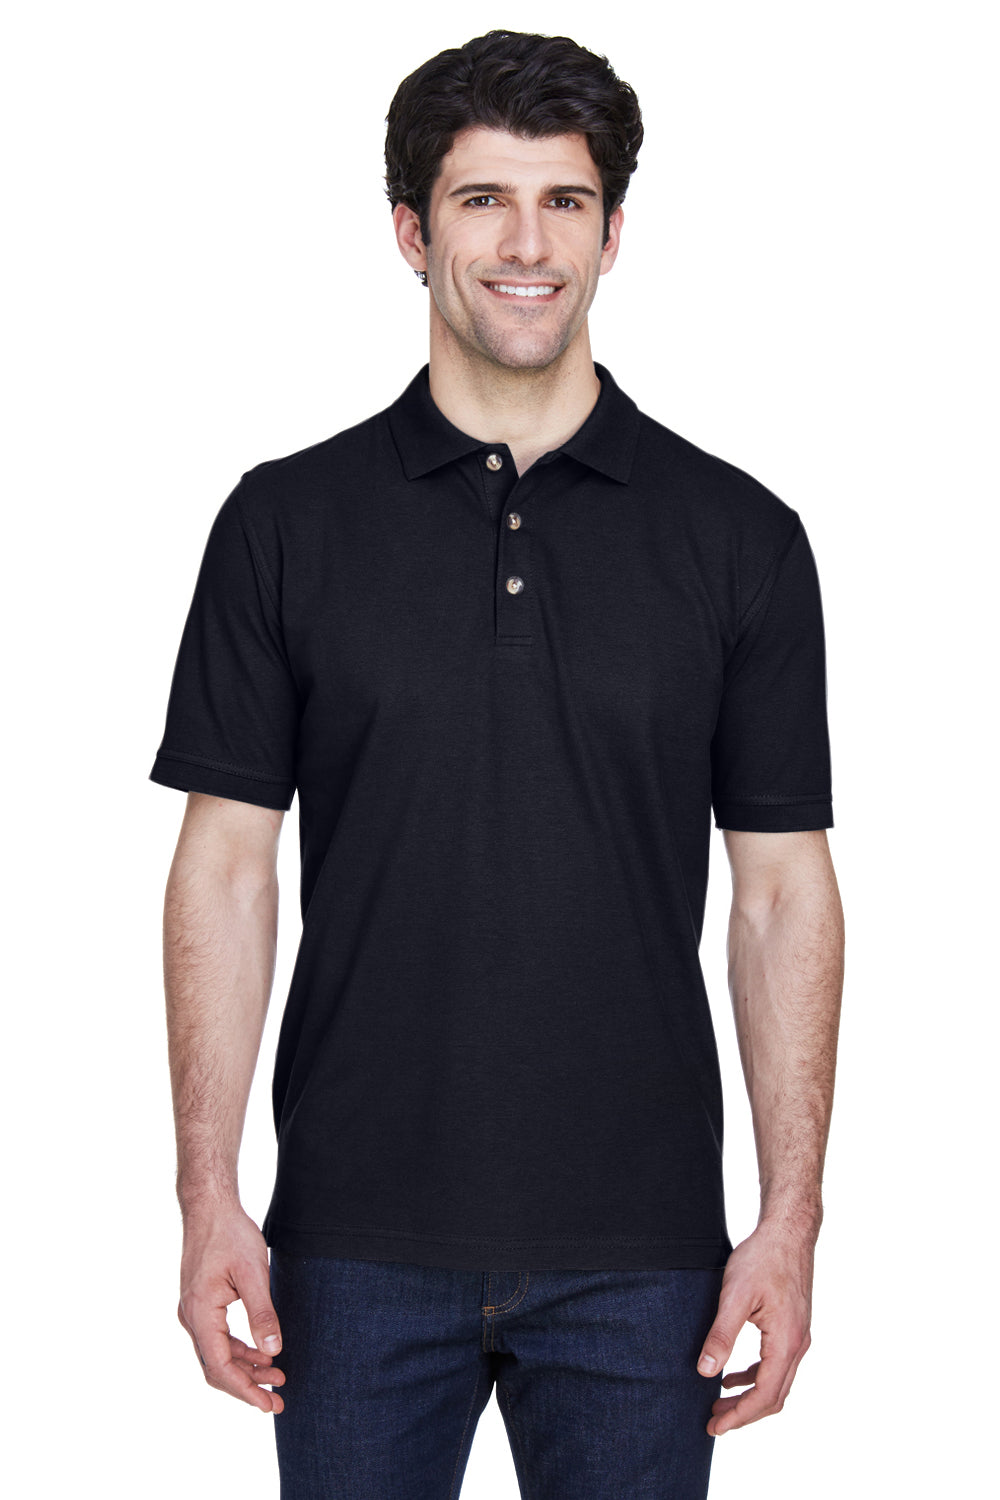 UltraClub 8535 Mens Classic Short Sleeve Polo Shirt Black Front